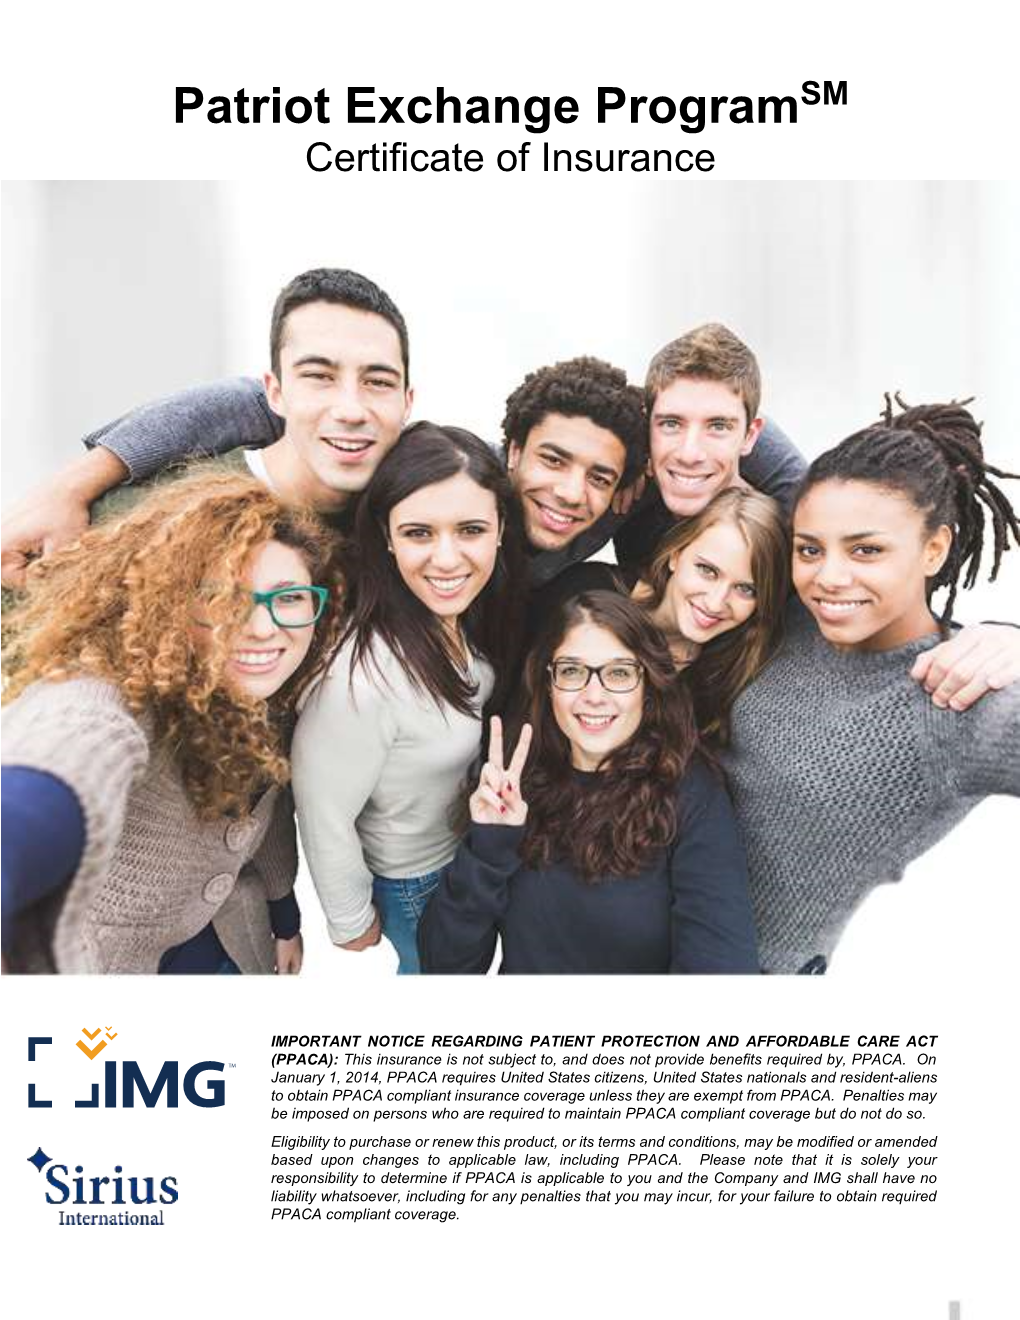 Patriot Exchange Program Certificate of Insurance